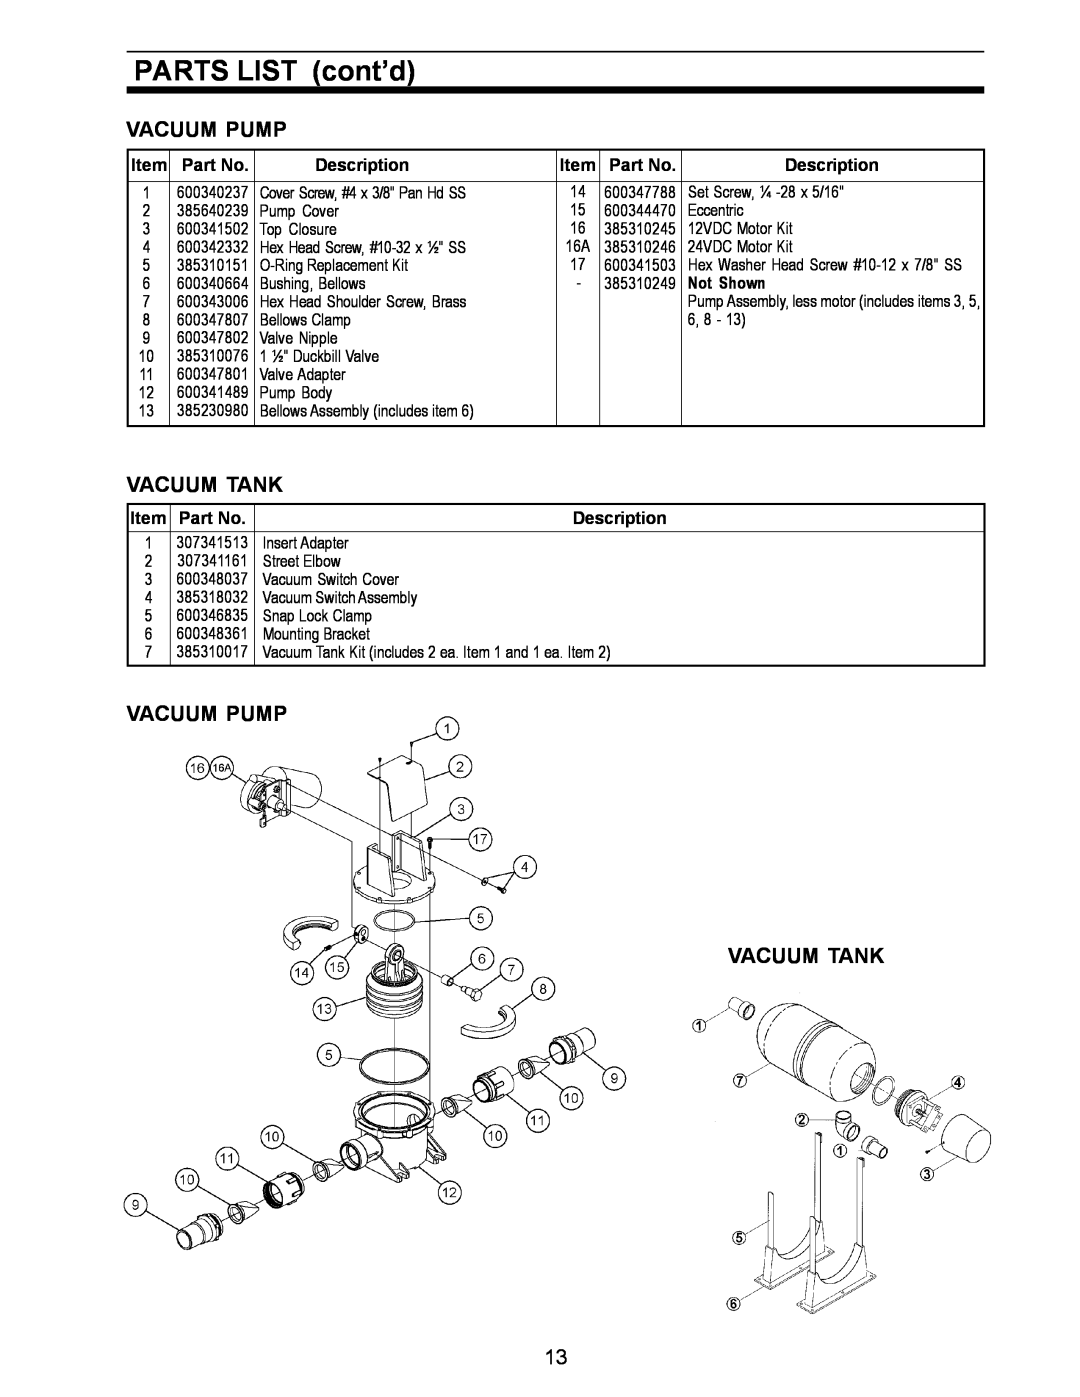 Dometic SANITATION SYSTEM owner manual Vacuum Pump Vacuum Tank, PARTS LIST cont’d, Description, Not Shown 